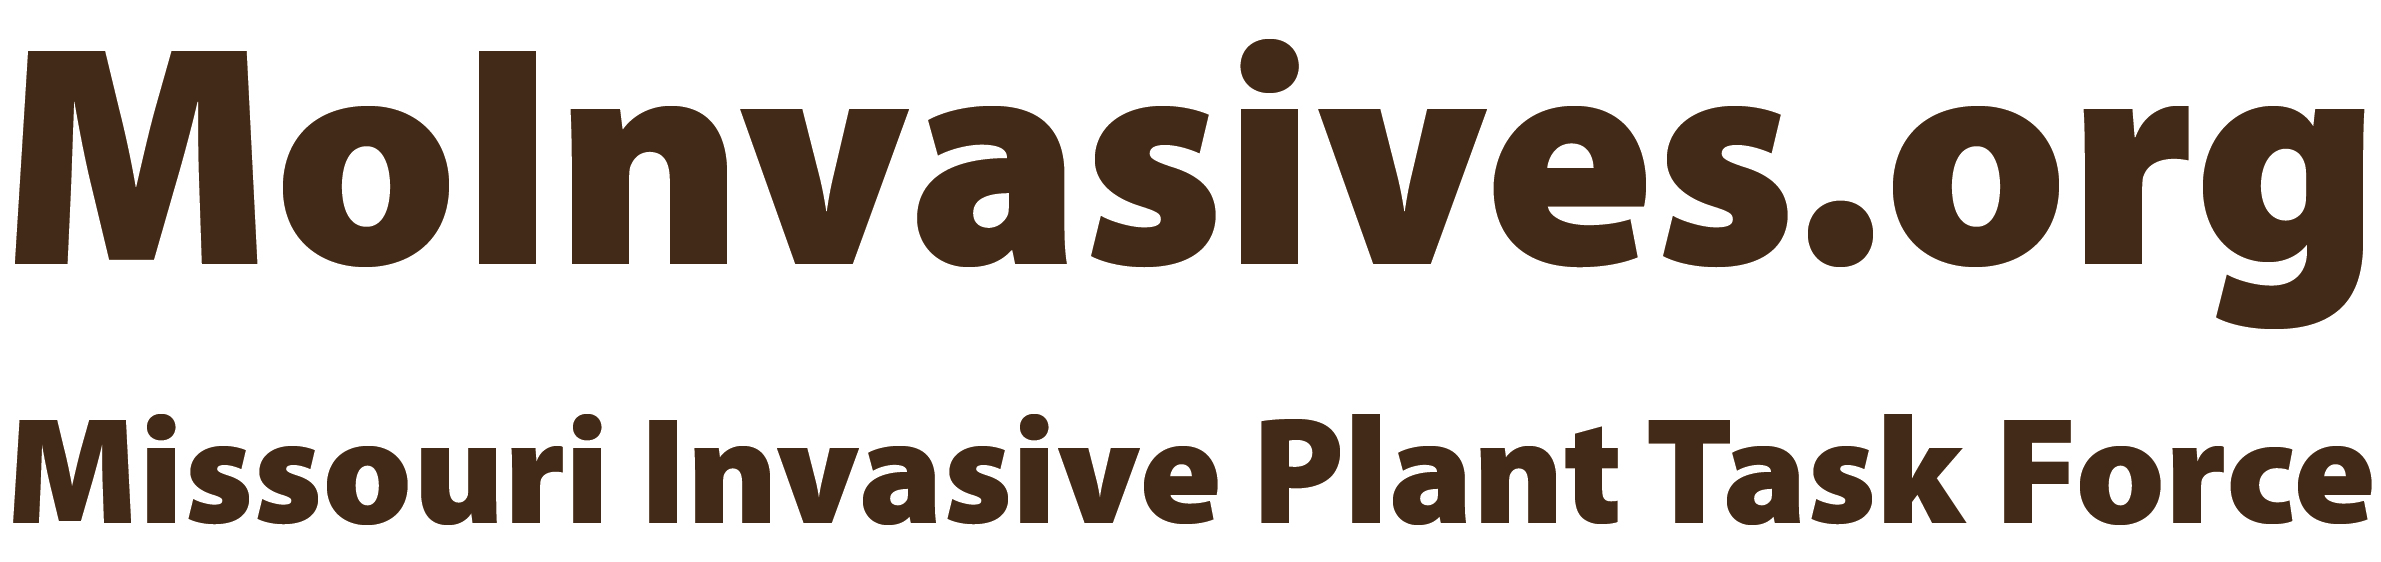 Missouri Invasive Plant Task Force